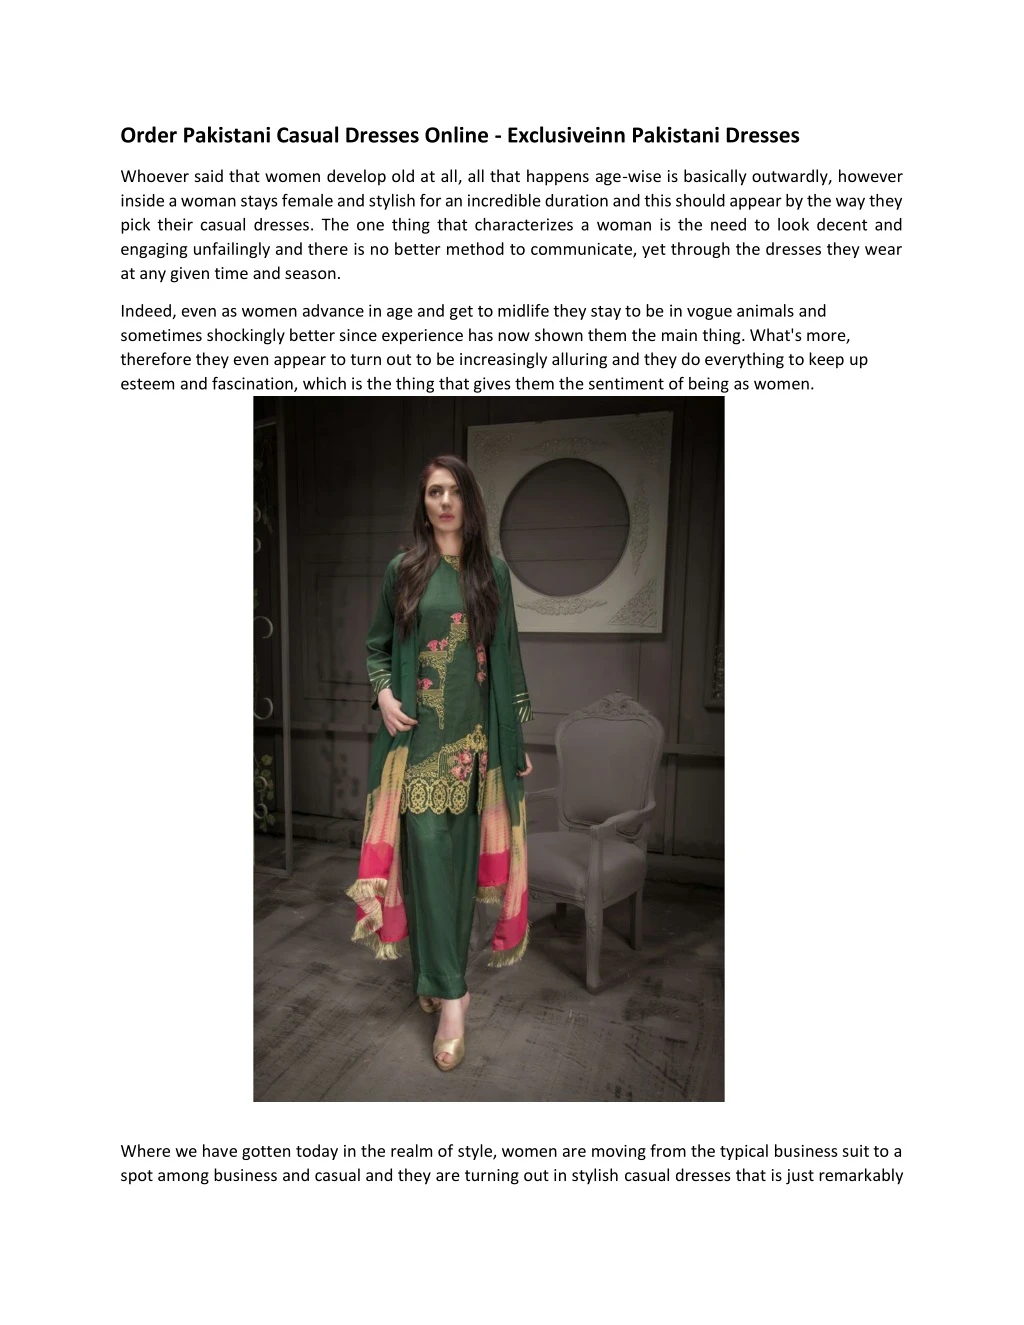 order pakistani casual dresses online